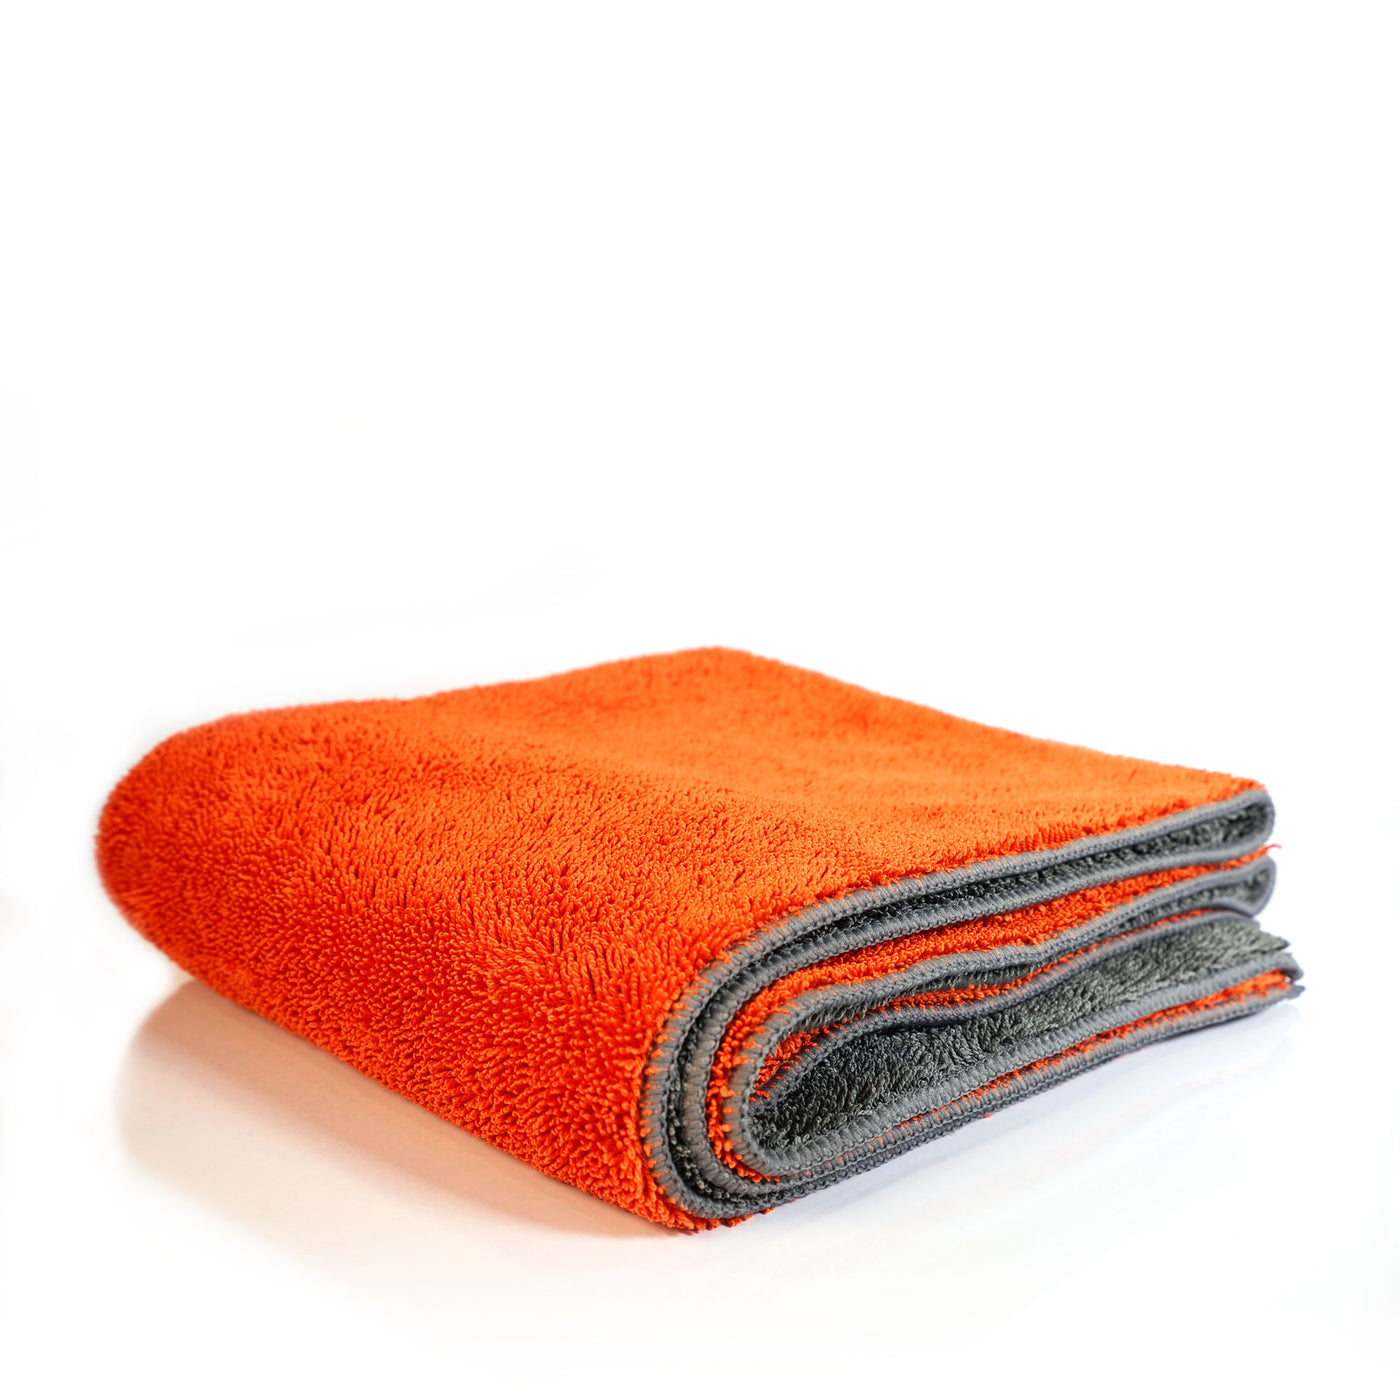 The Rag Company Twist-N-Shout Twisted Loop Drying Towel (25x36)